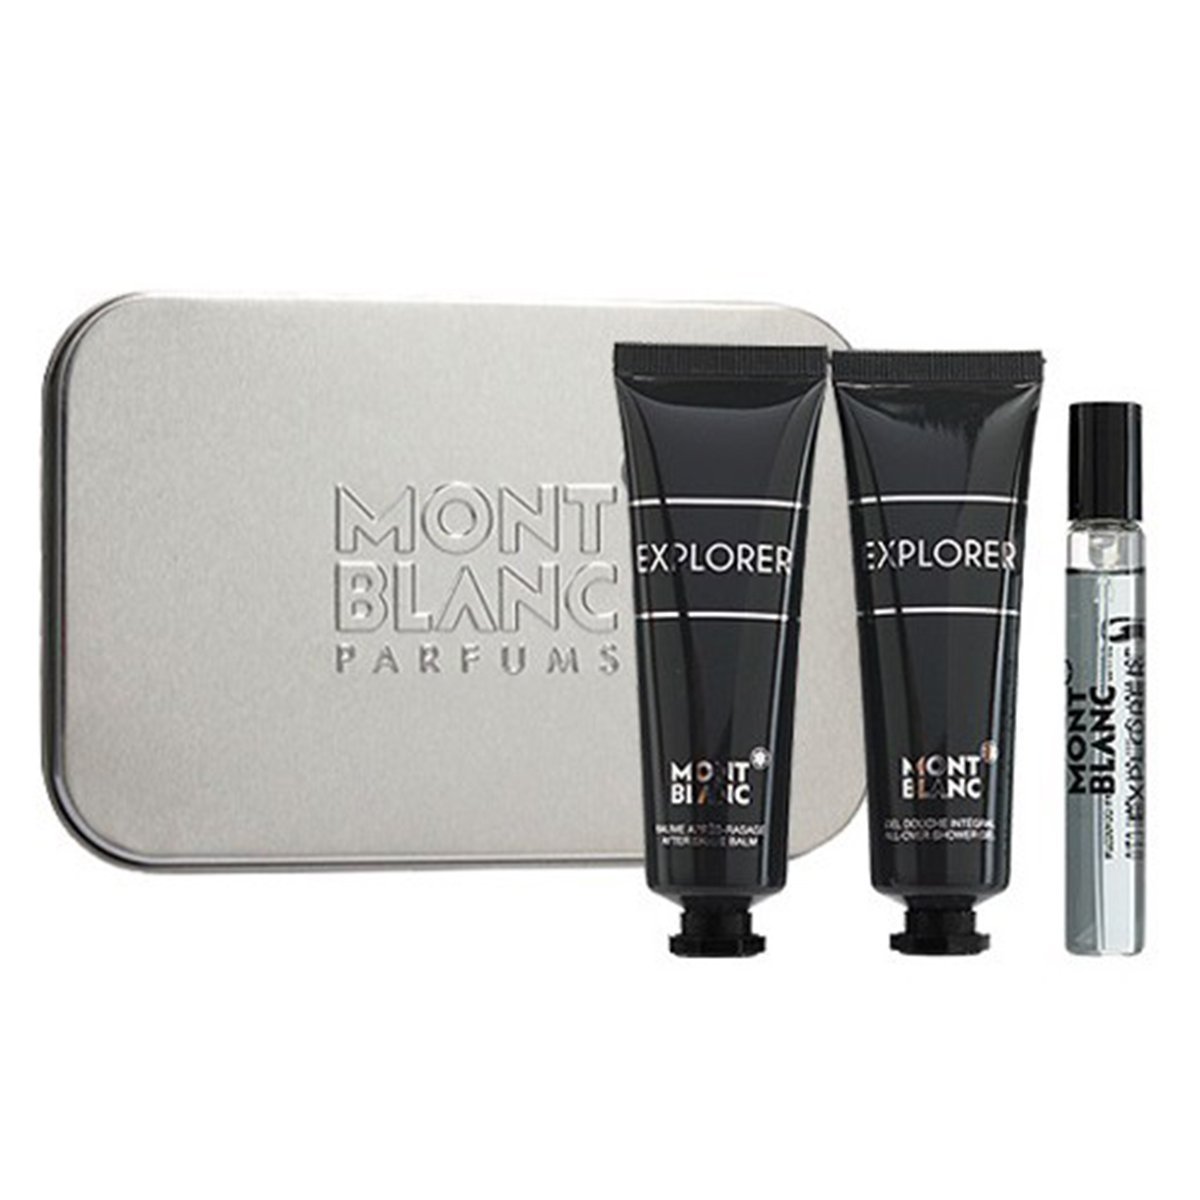 Mont Blanc Explorer Discovery Kit - My Perfume Shop Australia